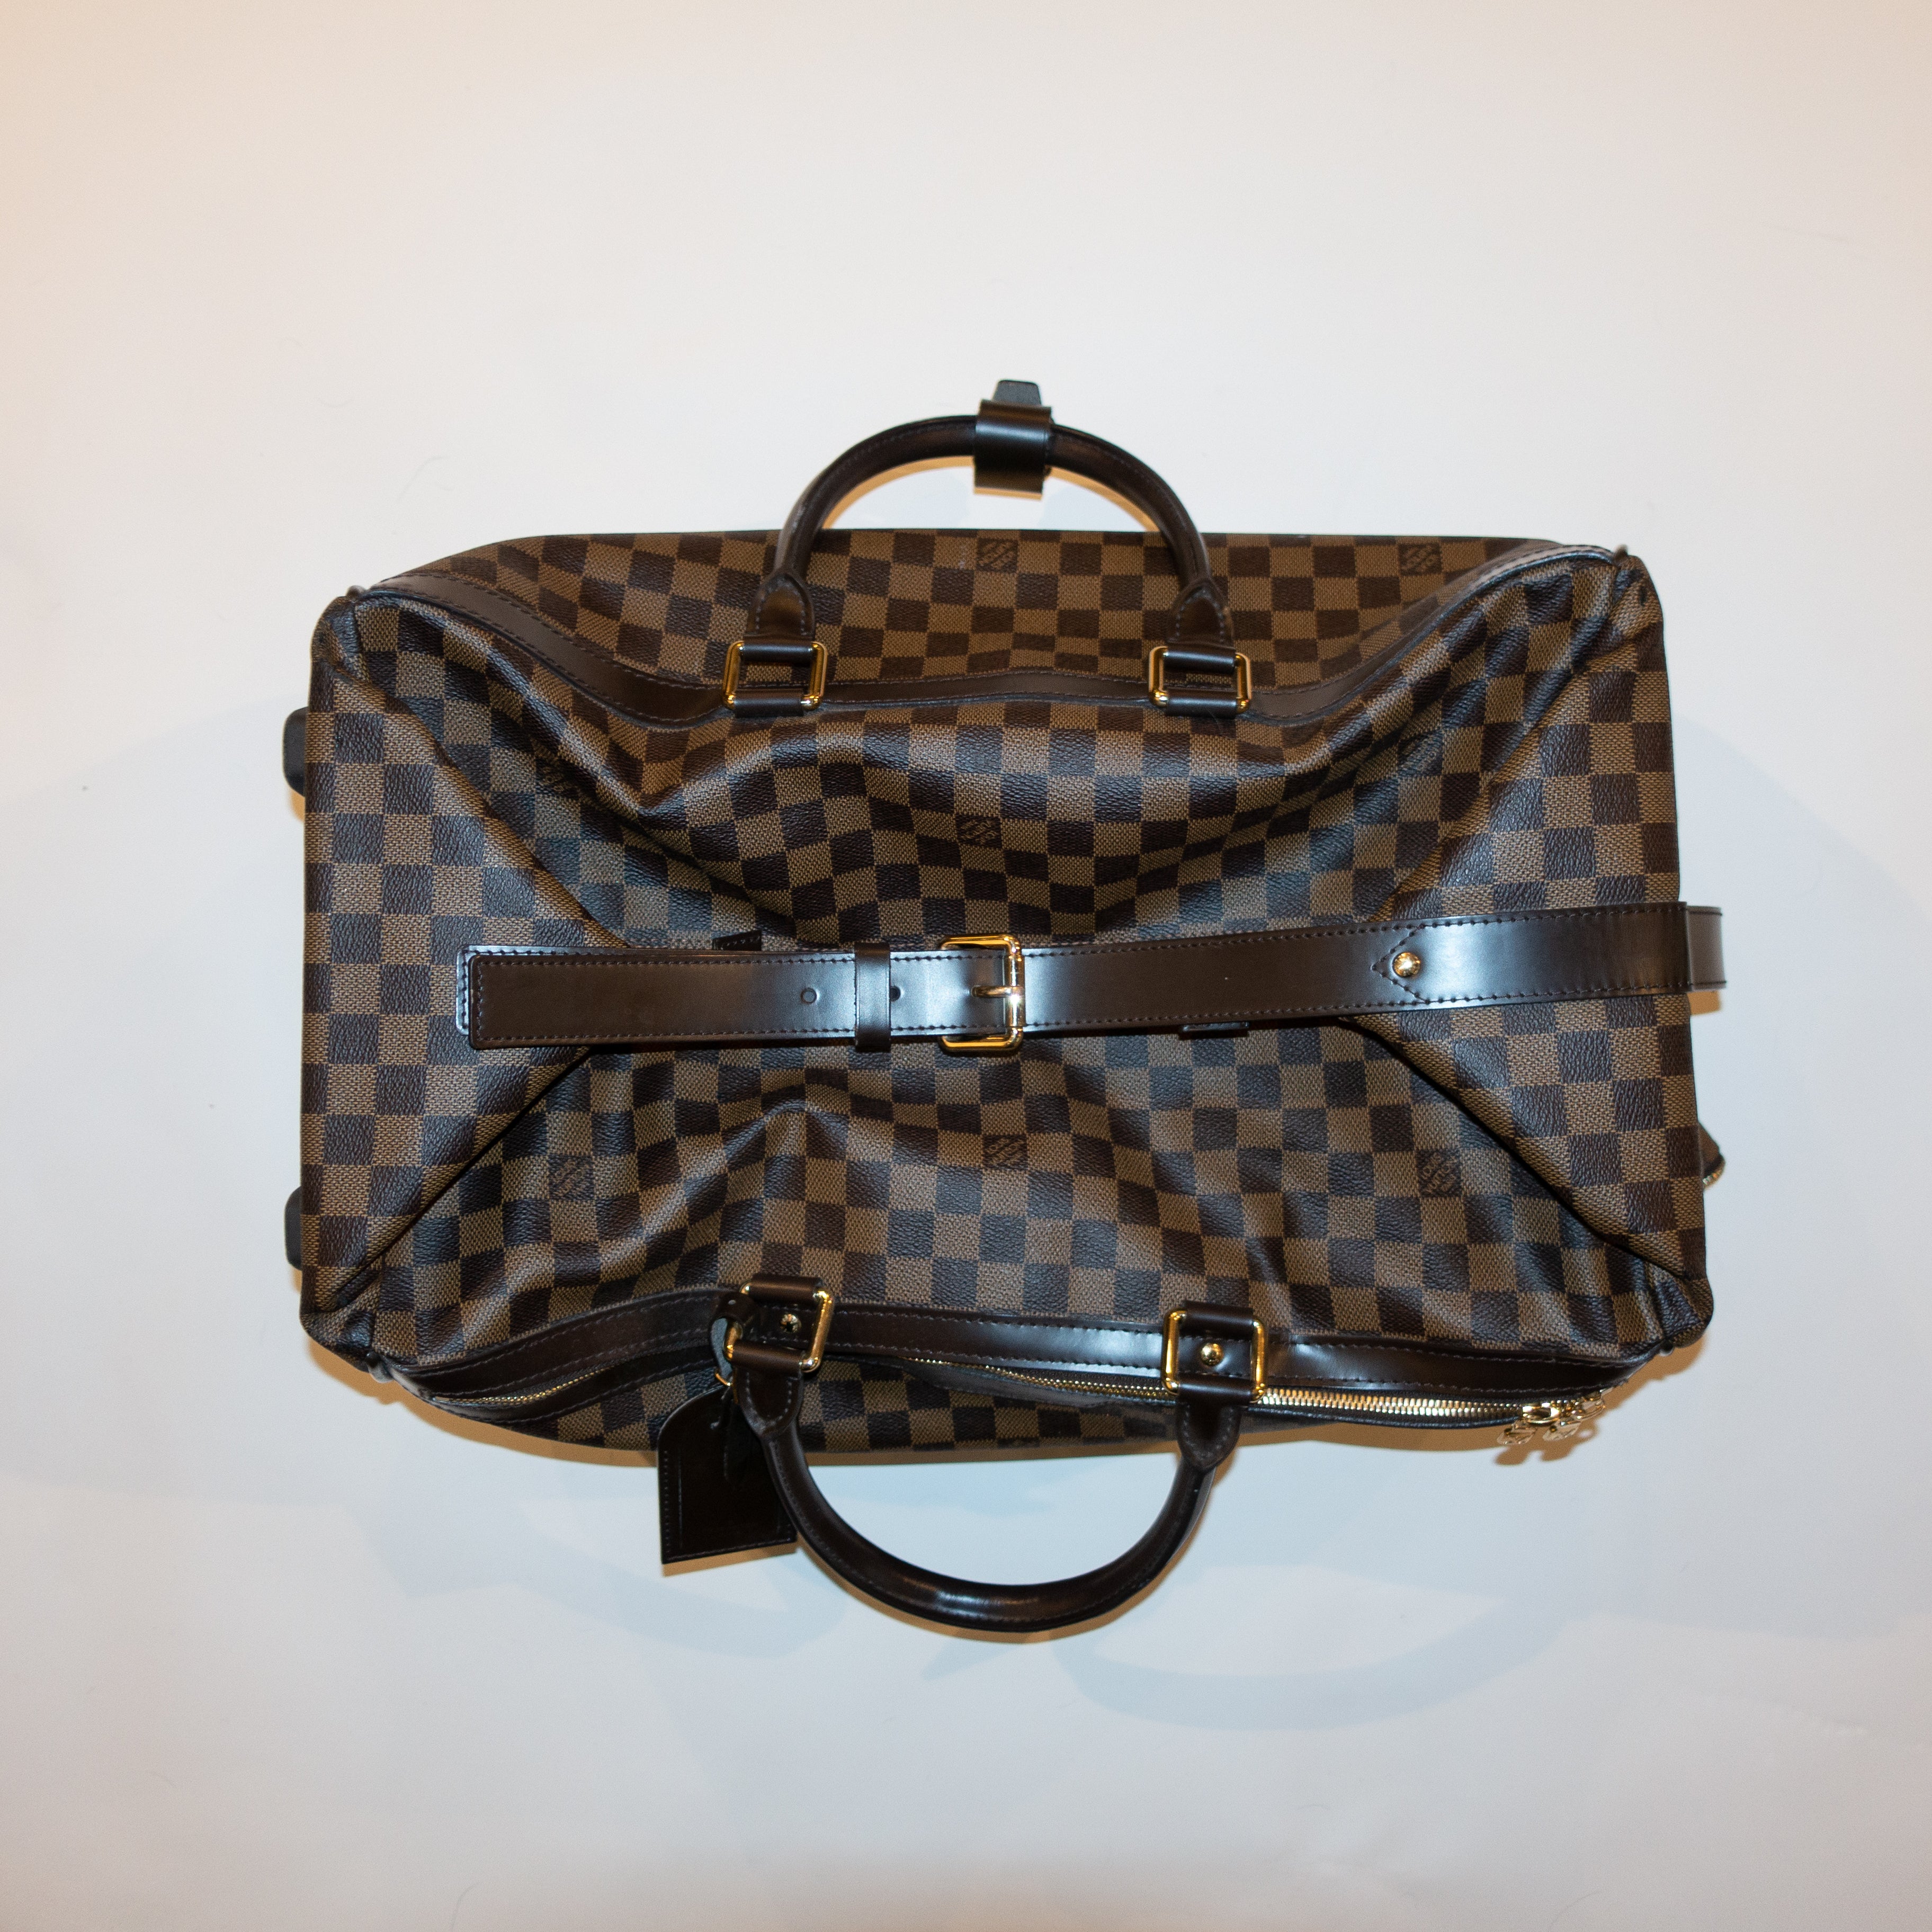 Louis Vuitton Orange Damier Nylon Masai Adventure Duffle Bag., Lot #58239